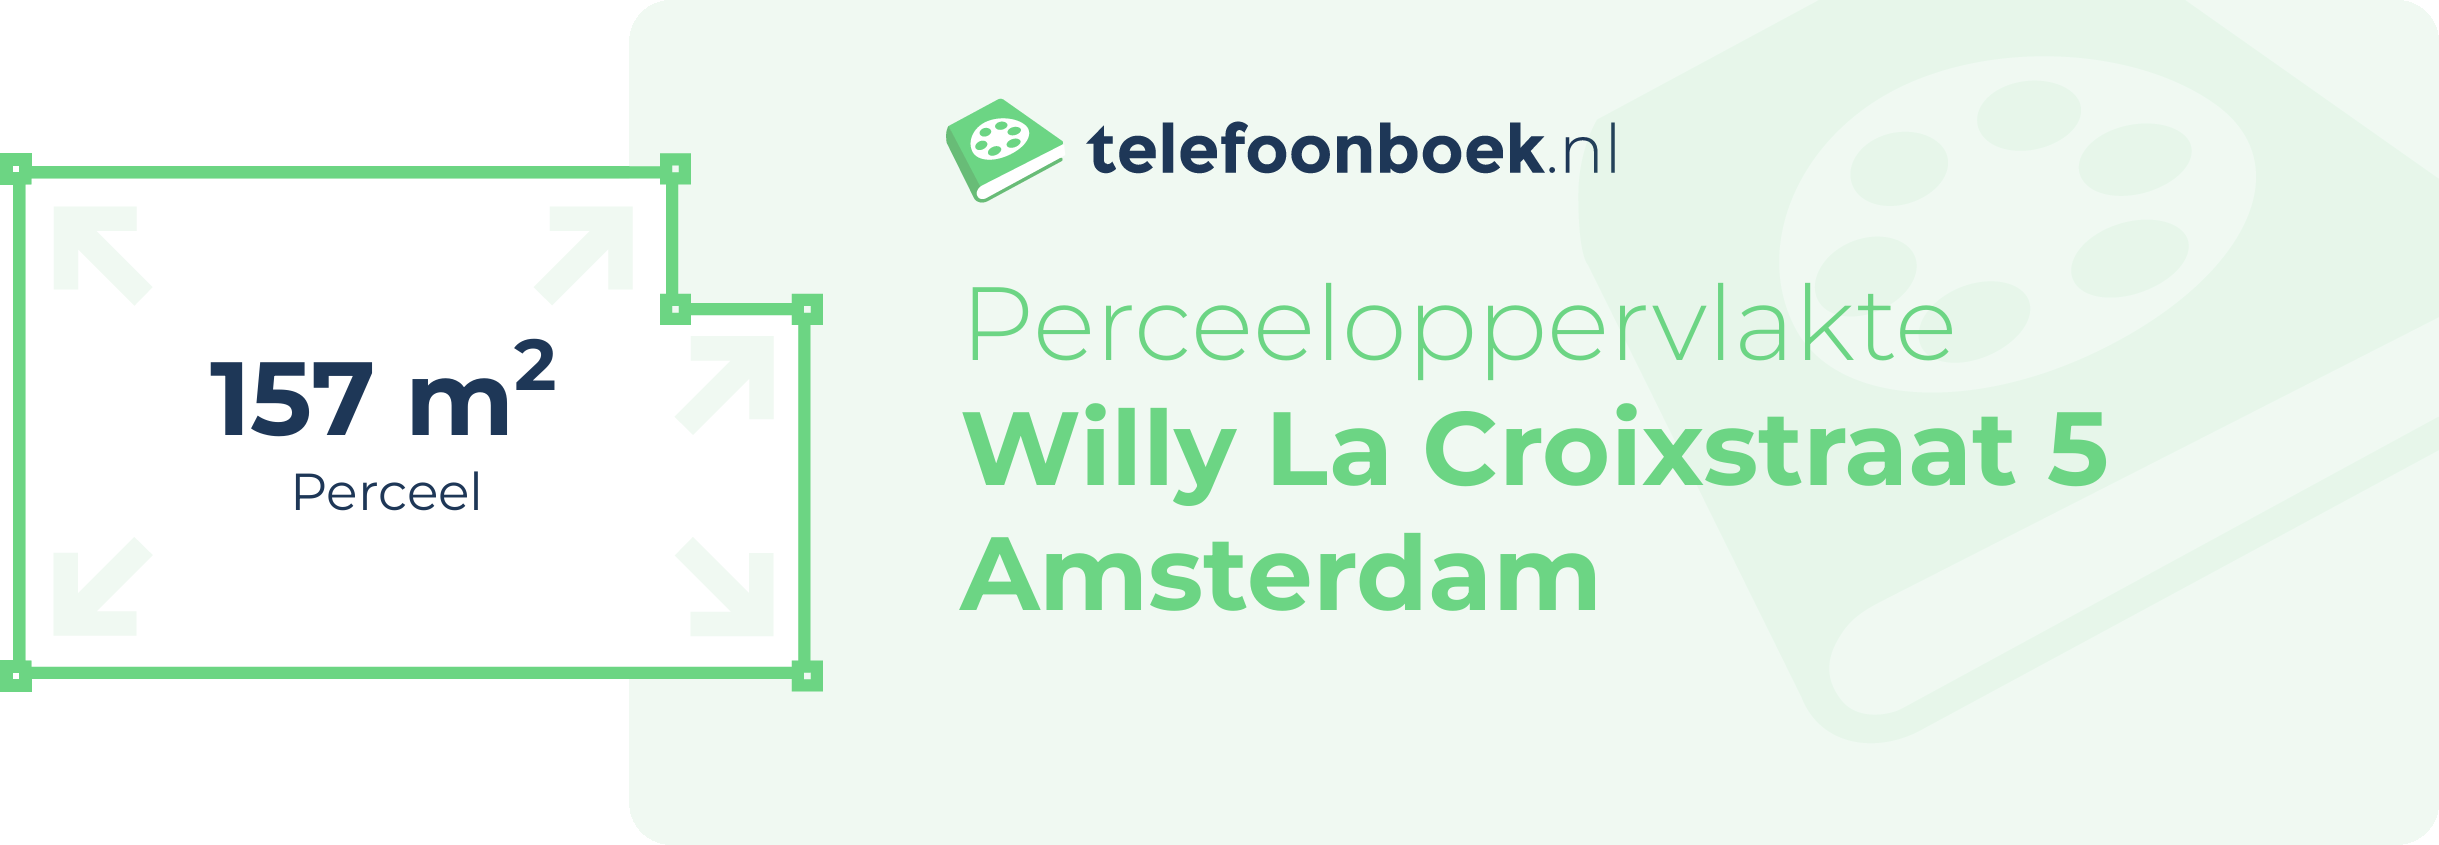 Perceeloppervlakte Willy La Croixstraat 5 Amsterdam